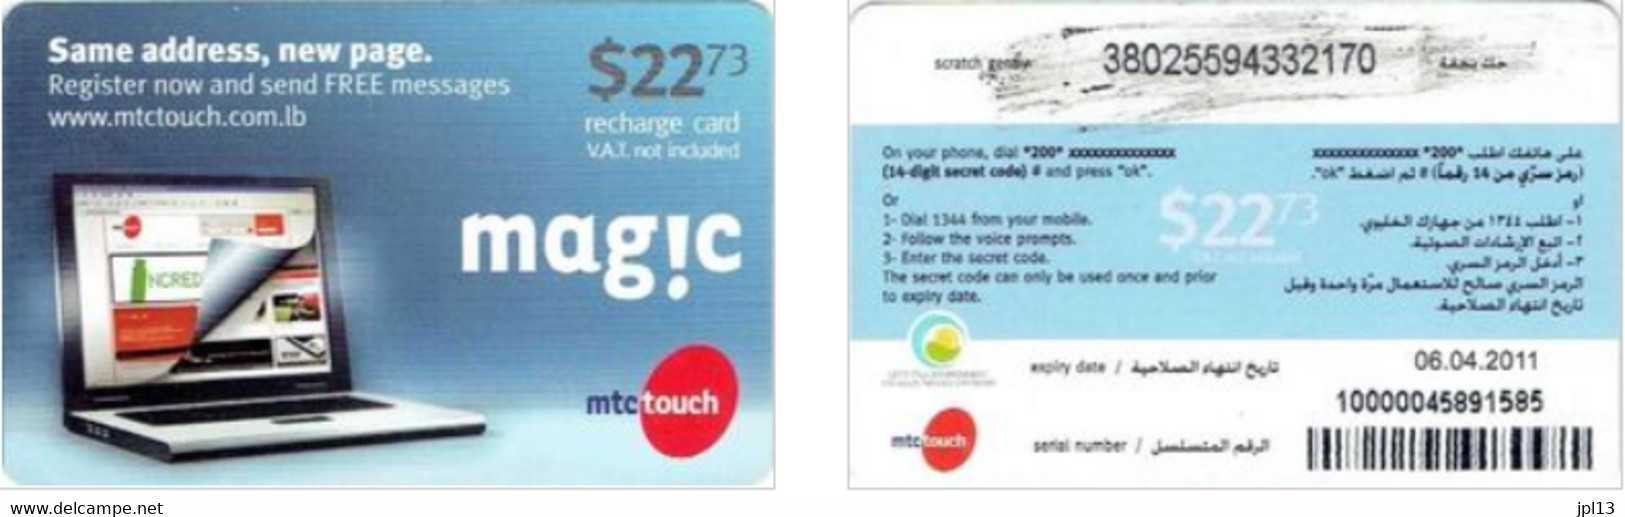 Recharge GSM - Liban - MTC Touch - Magic - Computer $22,73, Exp. 17/03/2011 - Lebanon